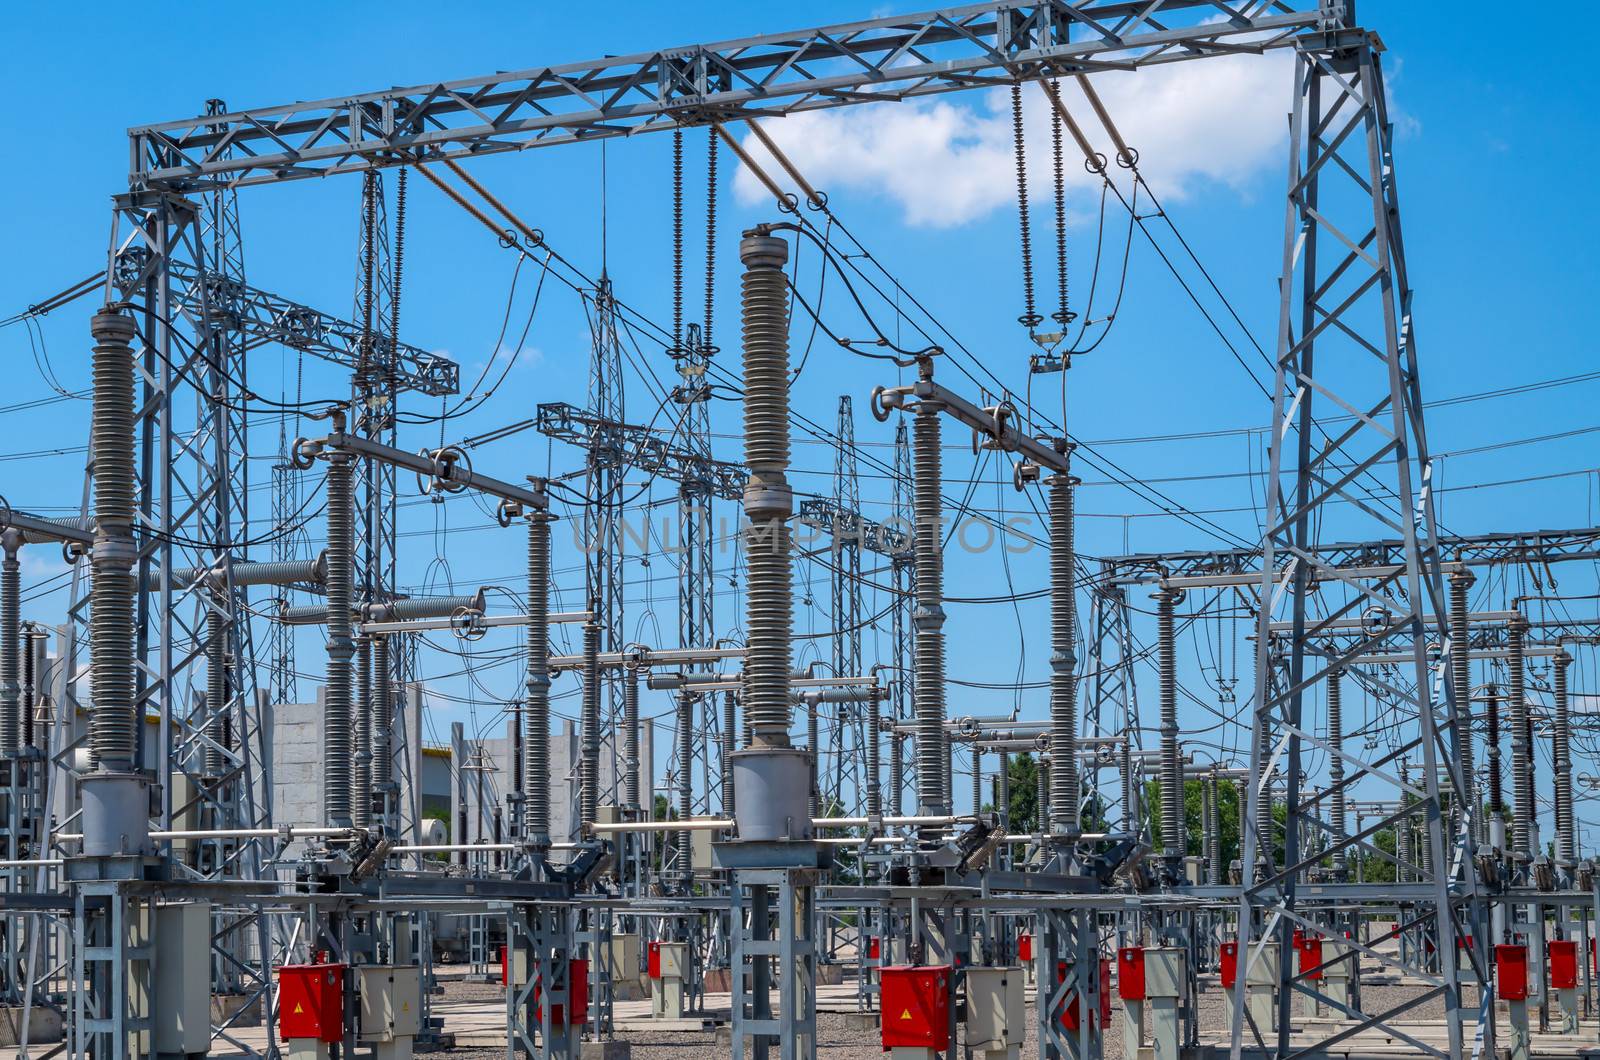 Image of high voltage transformer station against the blue sky.